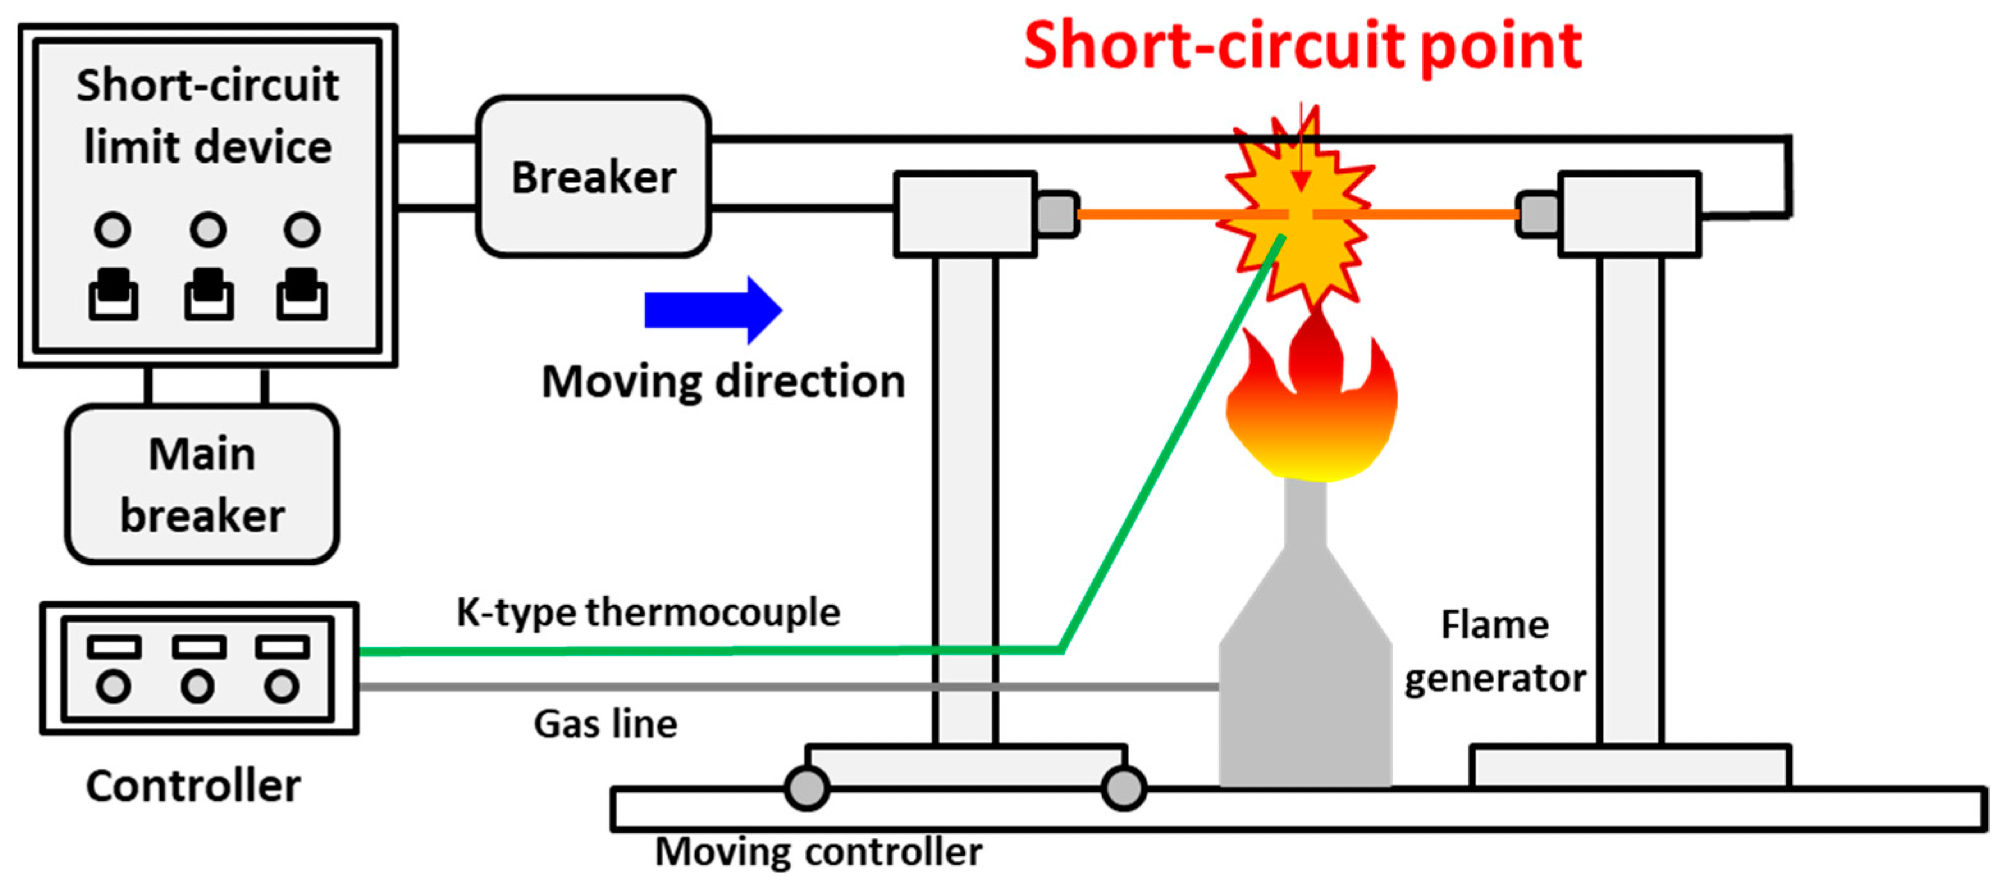 Schematic illustration of the short-circuit generator